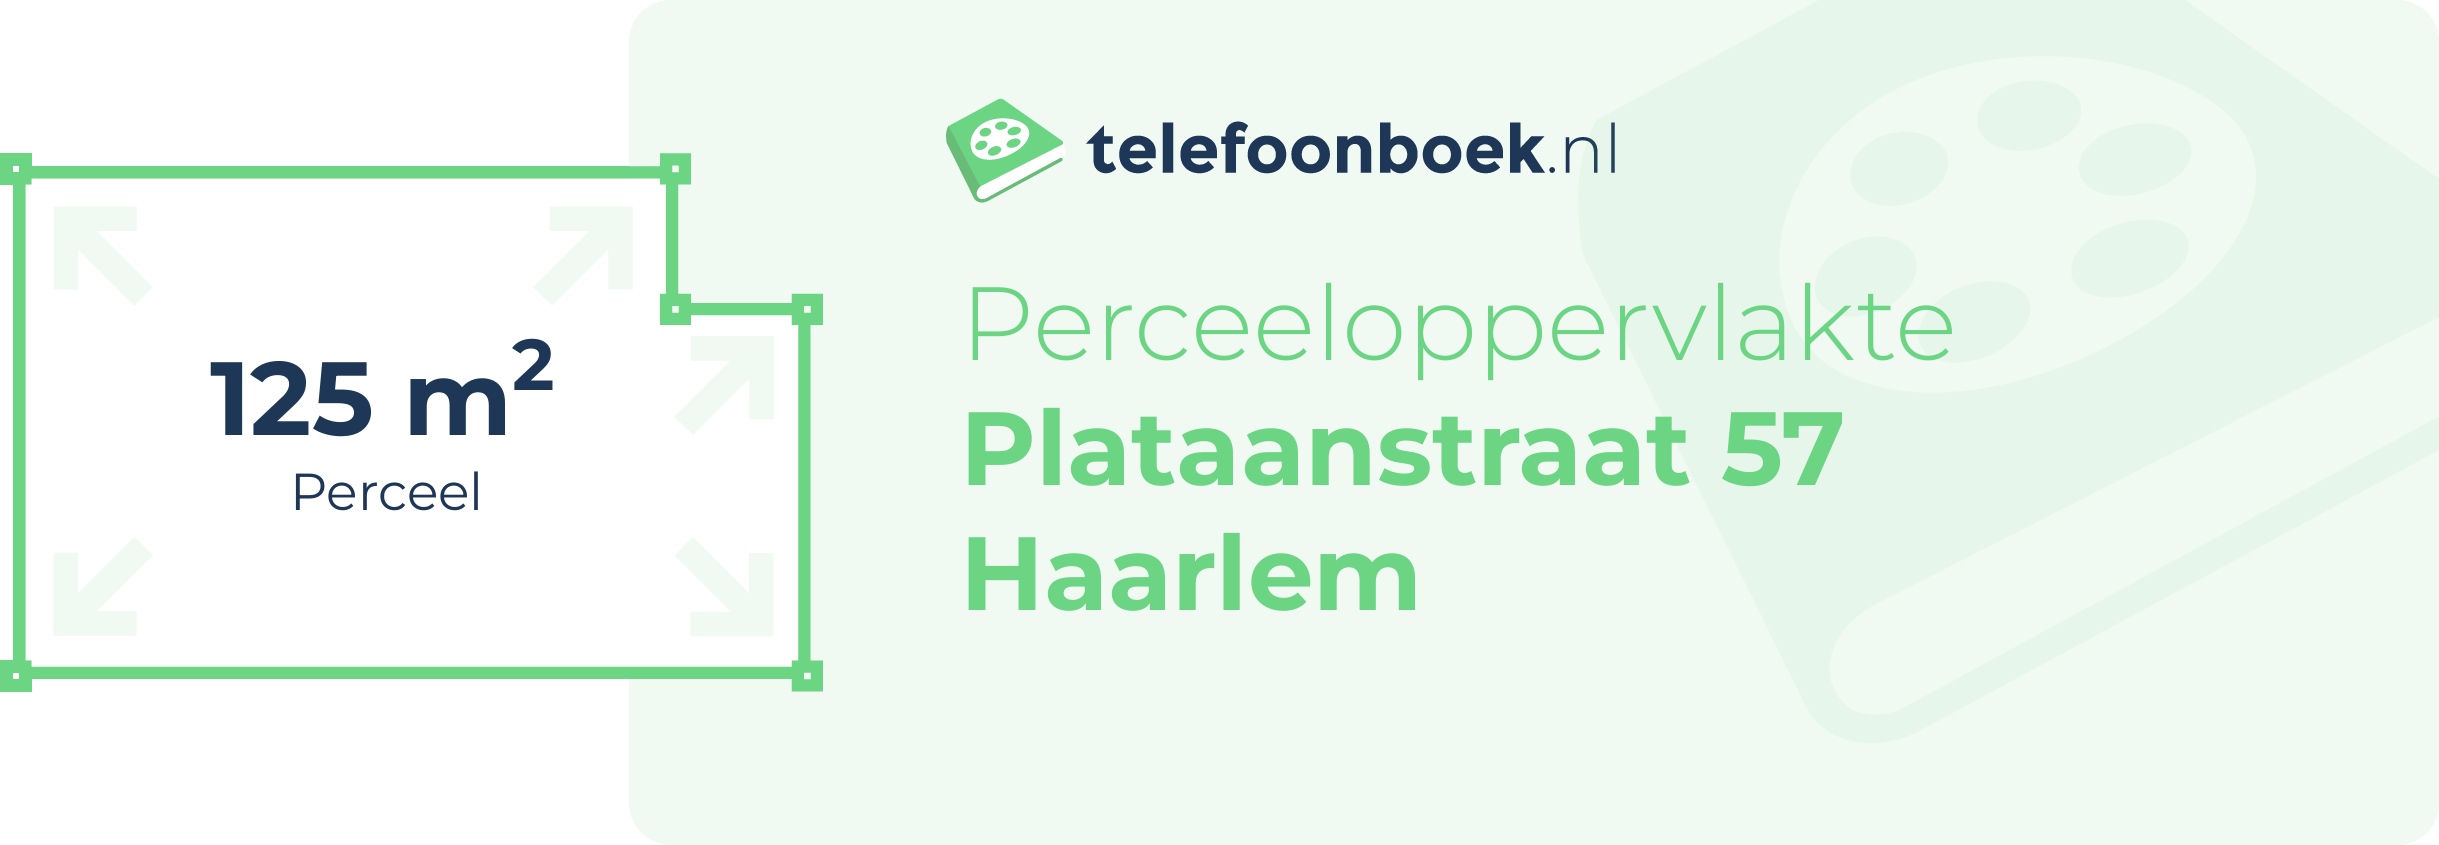 Perceeloppervlakte Plataanstraat 57 Haarlem